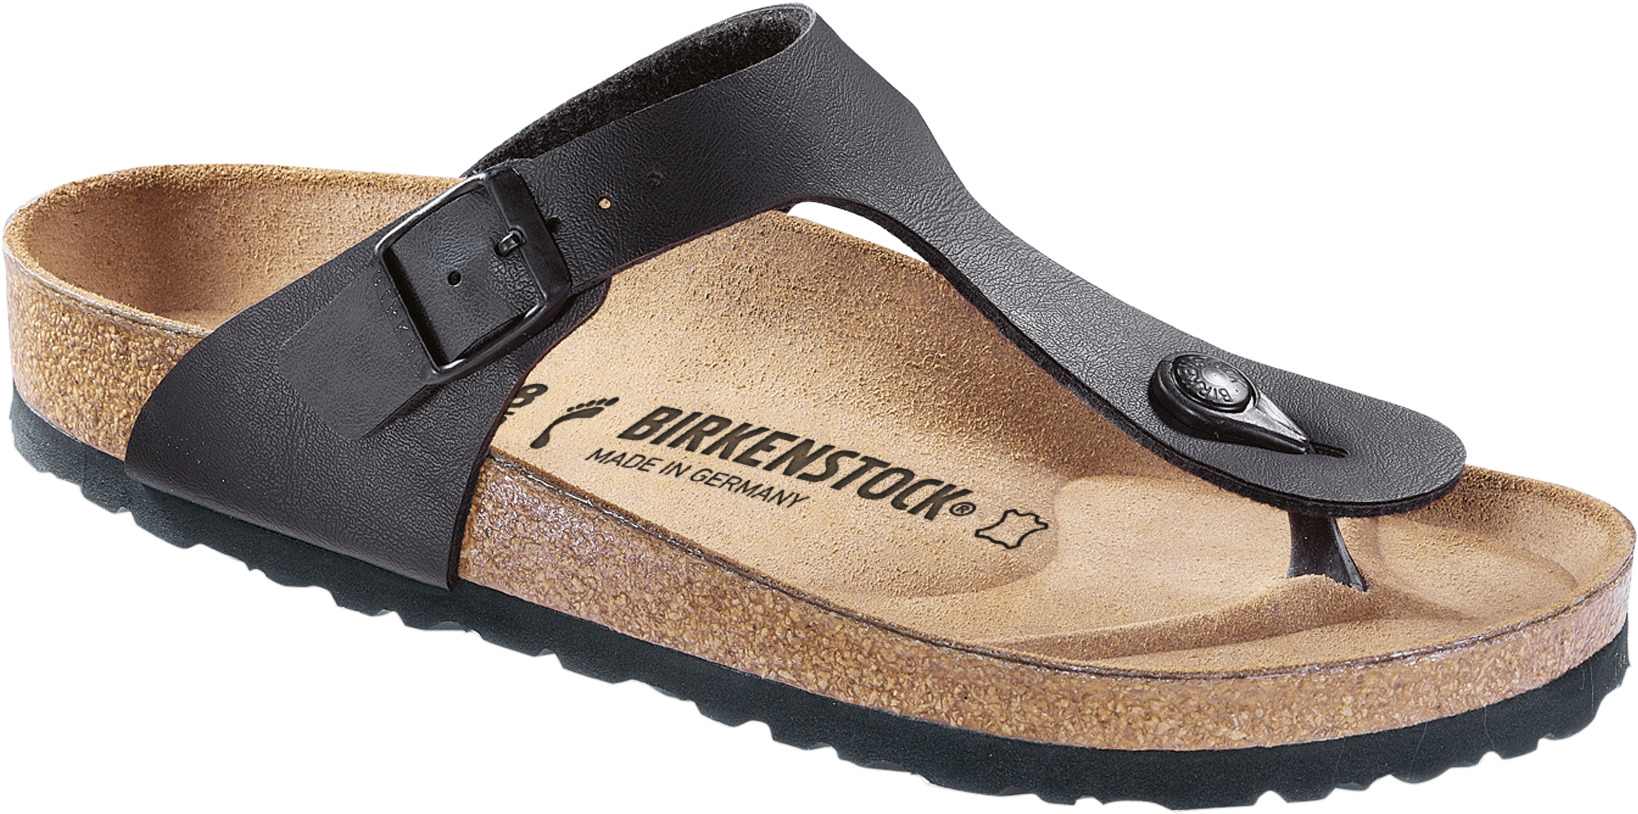 Birkenstock Gizeh BF 43691 Ladies Black Textile Arch Support Slip On Sandals